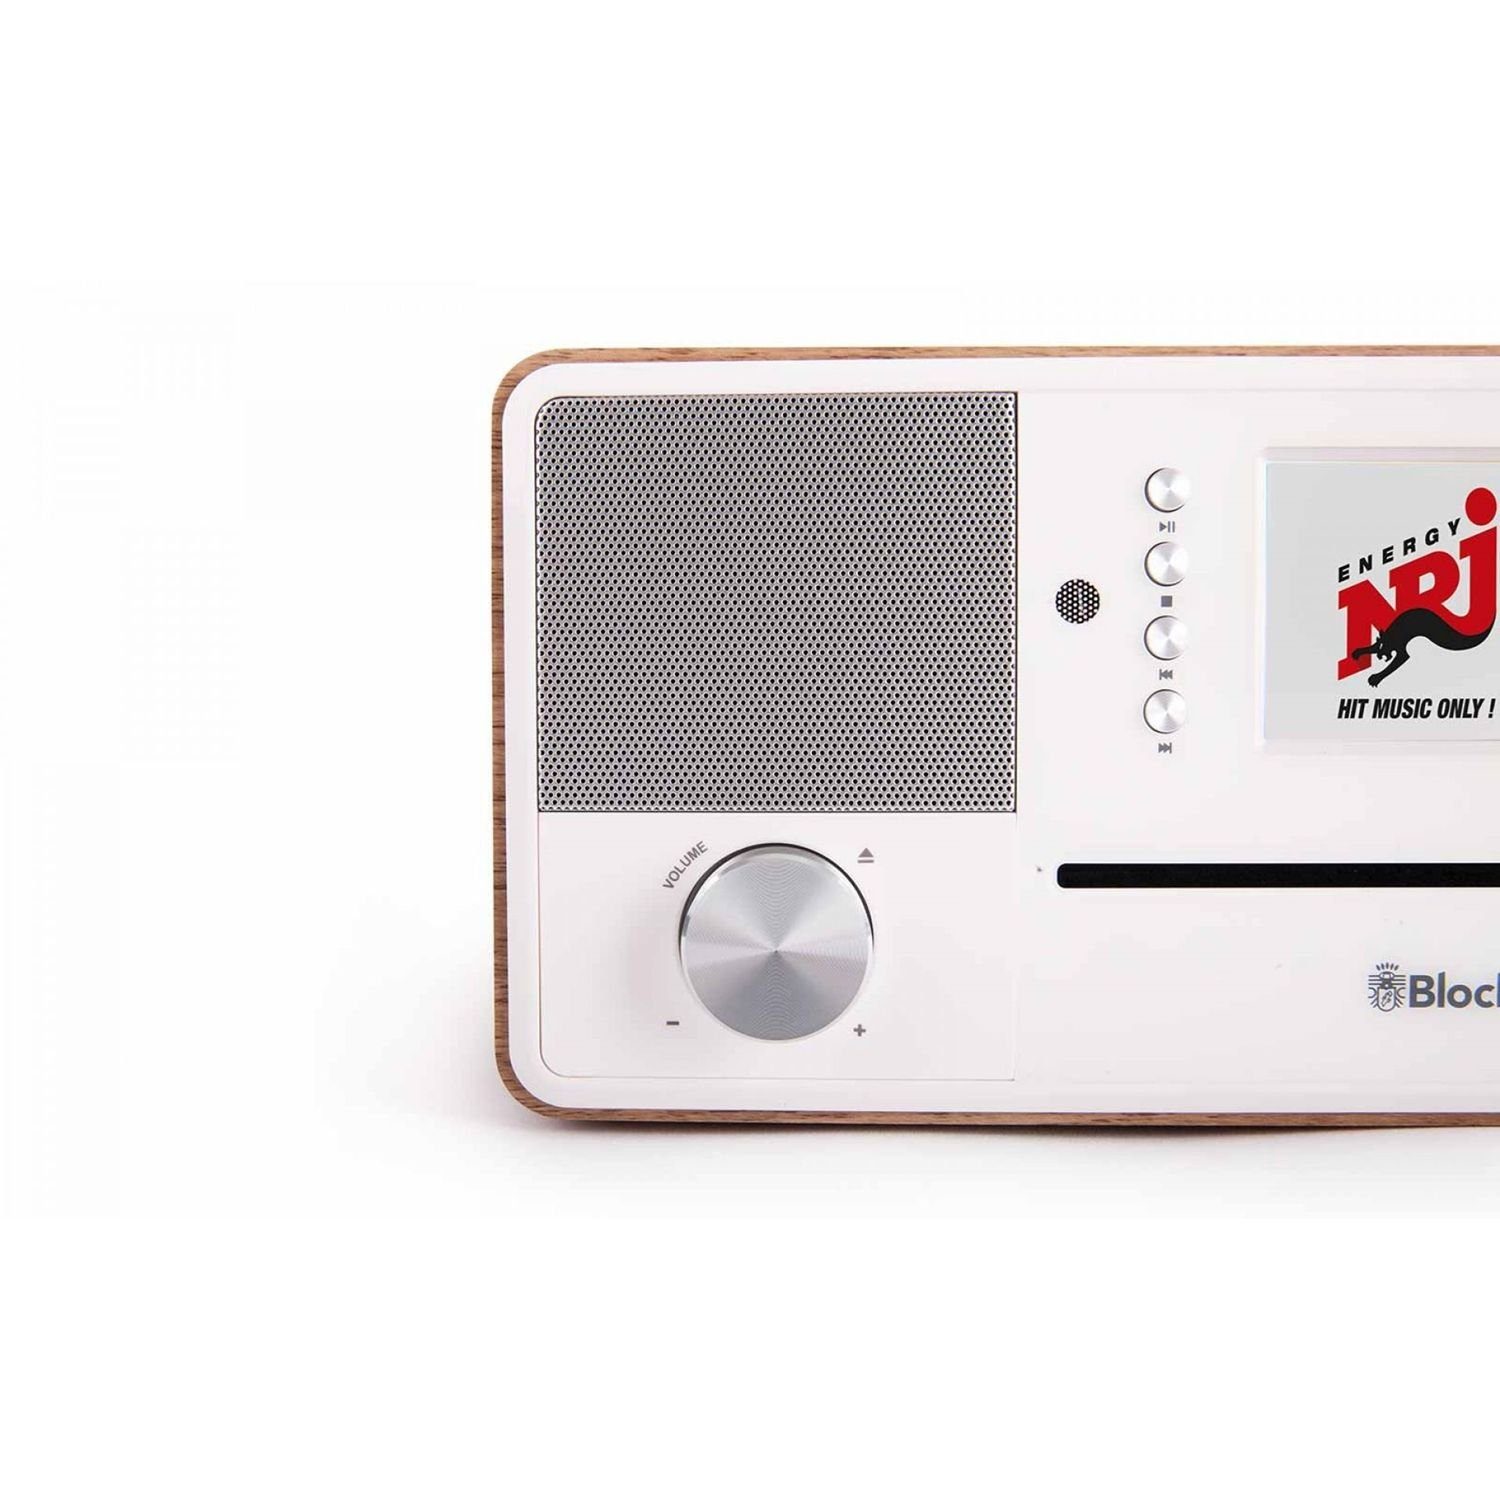 Block SR-50 Smartradio Spotify UKW/DAB+/Internetradio USB (DAB) walnuss/silber Bluetooth CD Digitalradio